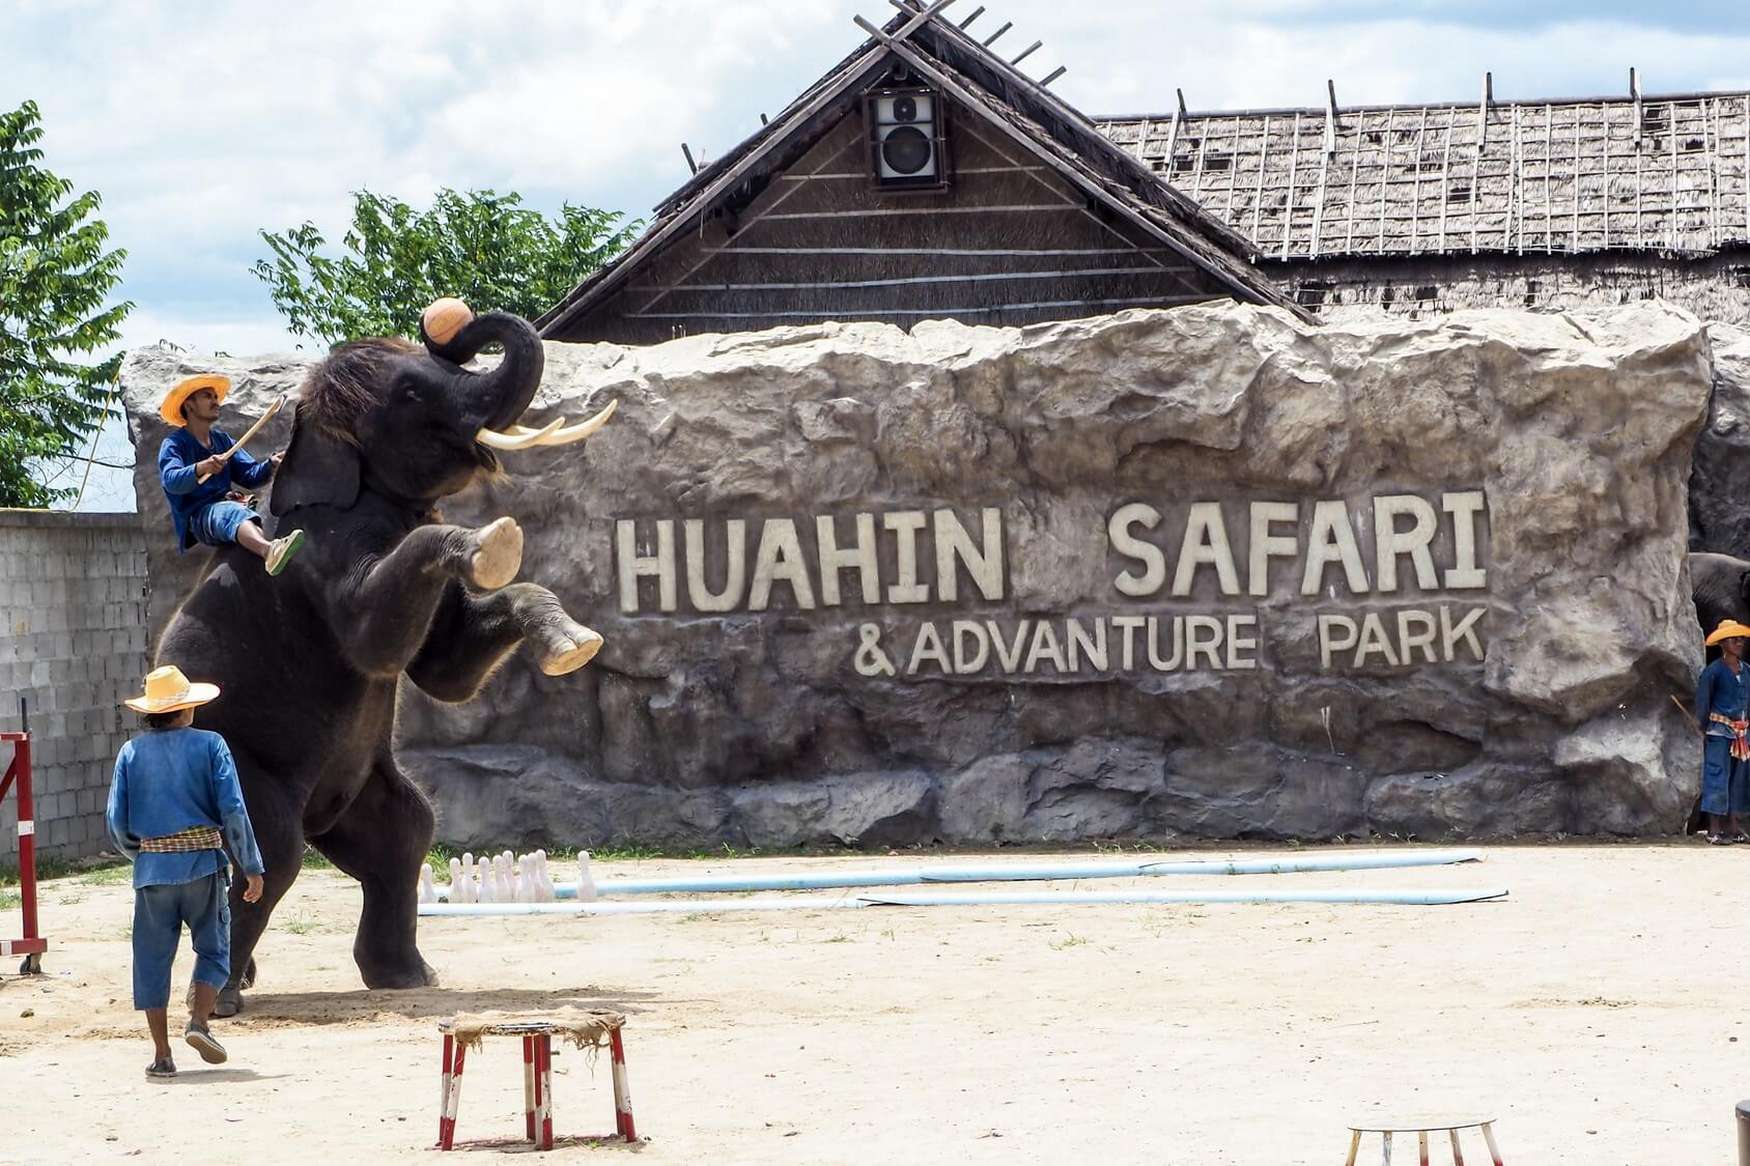 Hua Hin Safari and Adventure Park